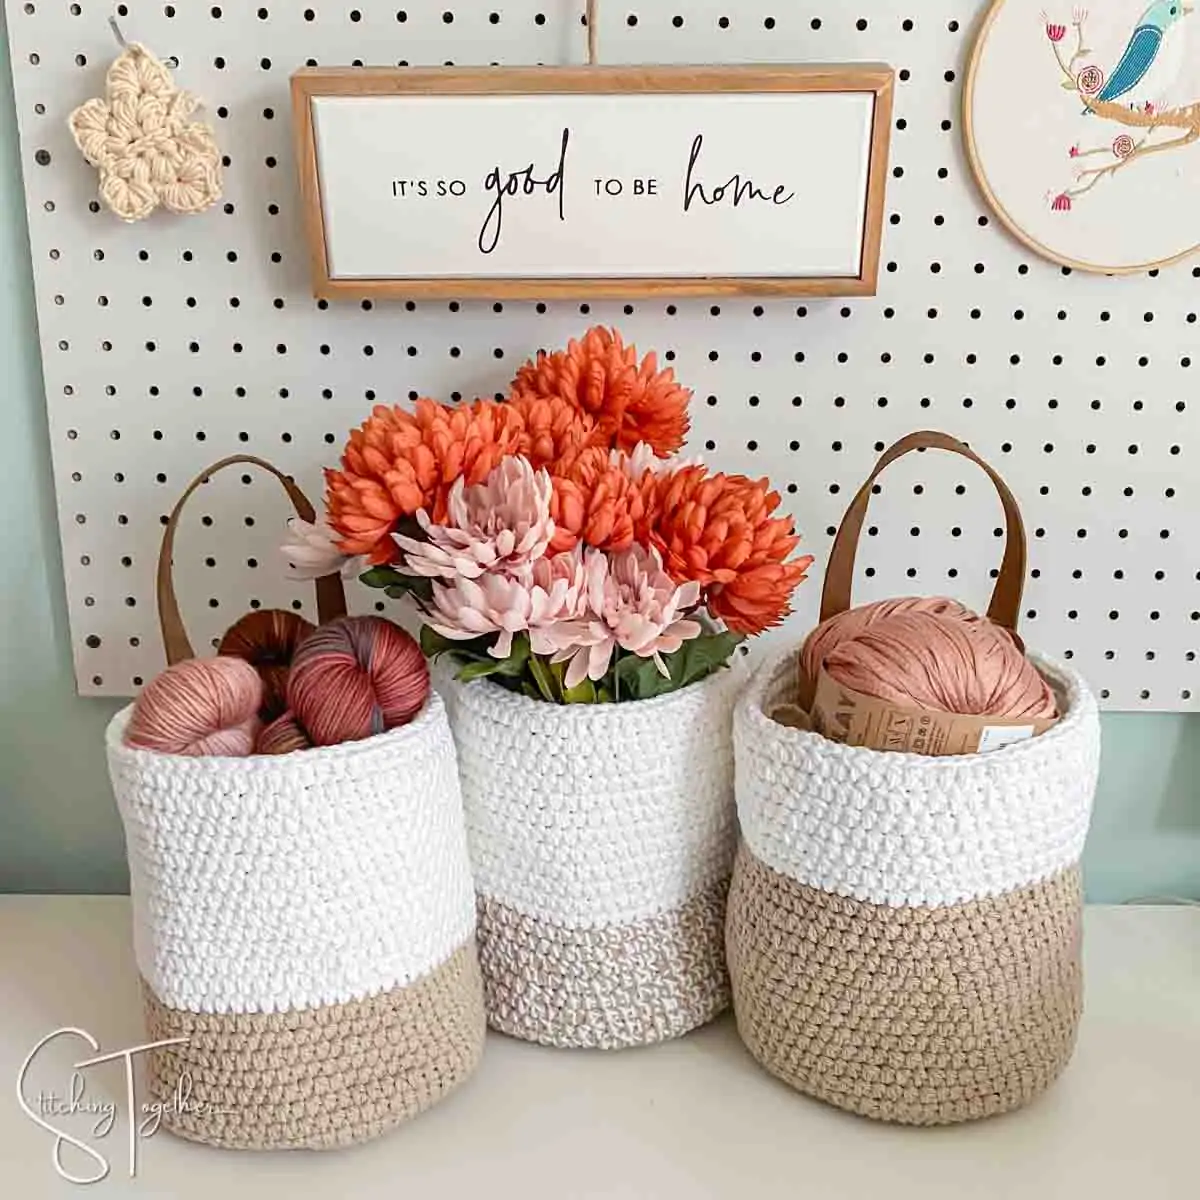 3 crochet baskets sitting on a shelf filled with yarn or flowers